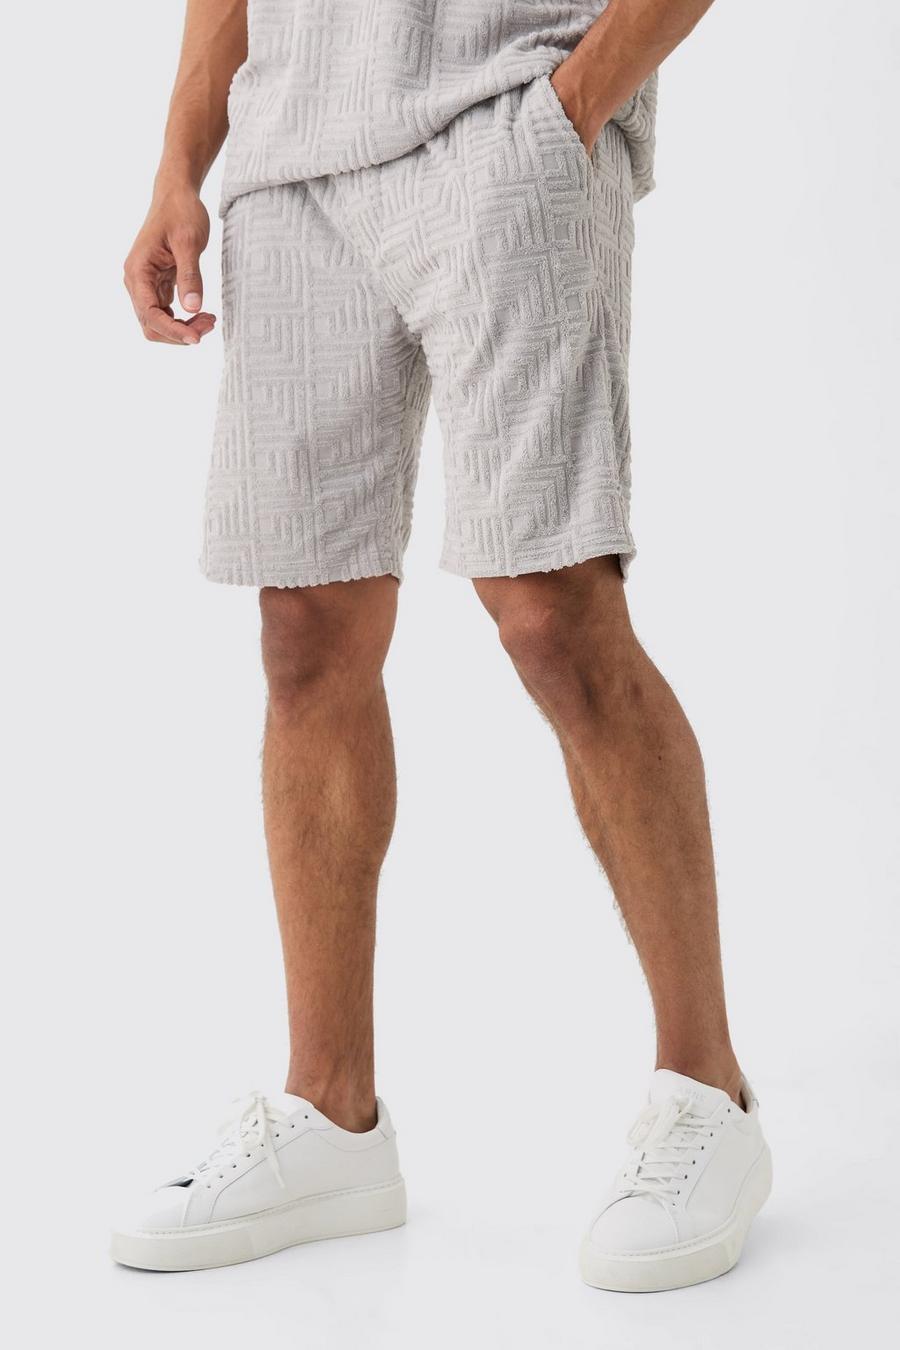 Lockere Jacquard Frottee-Shorts, Light grey